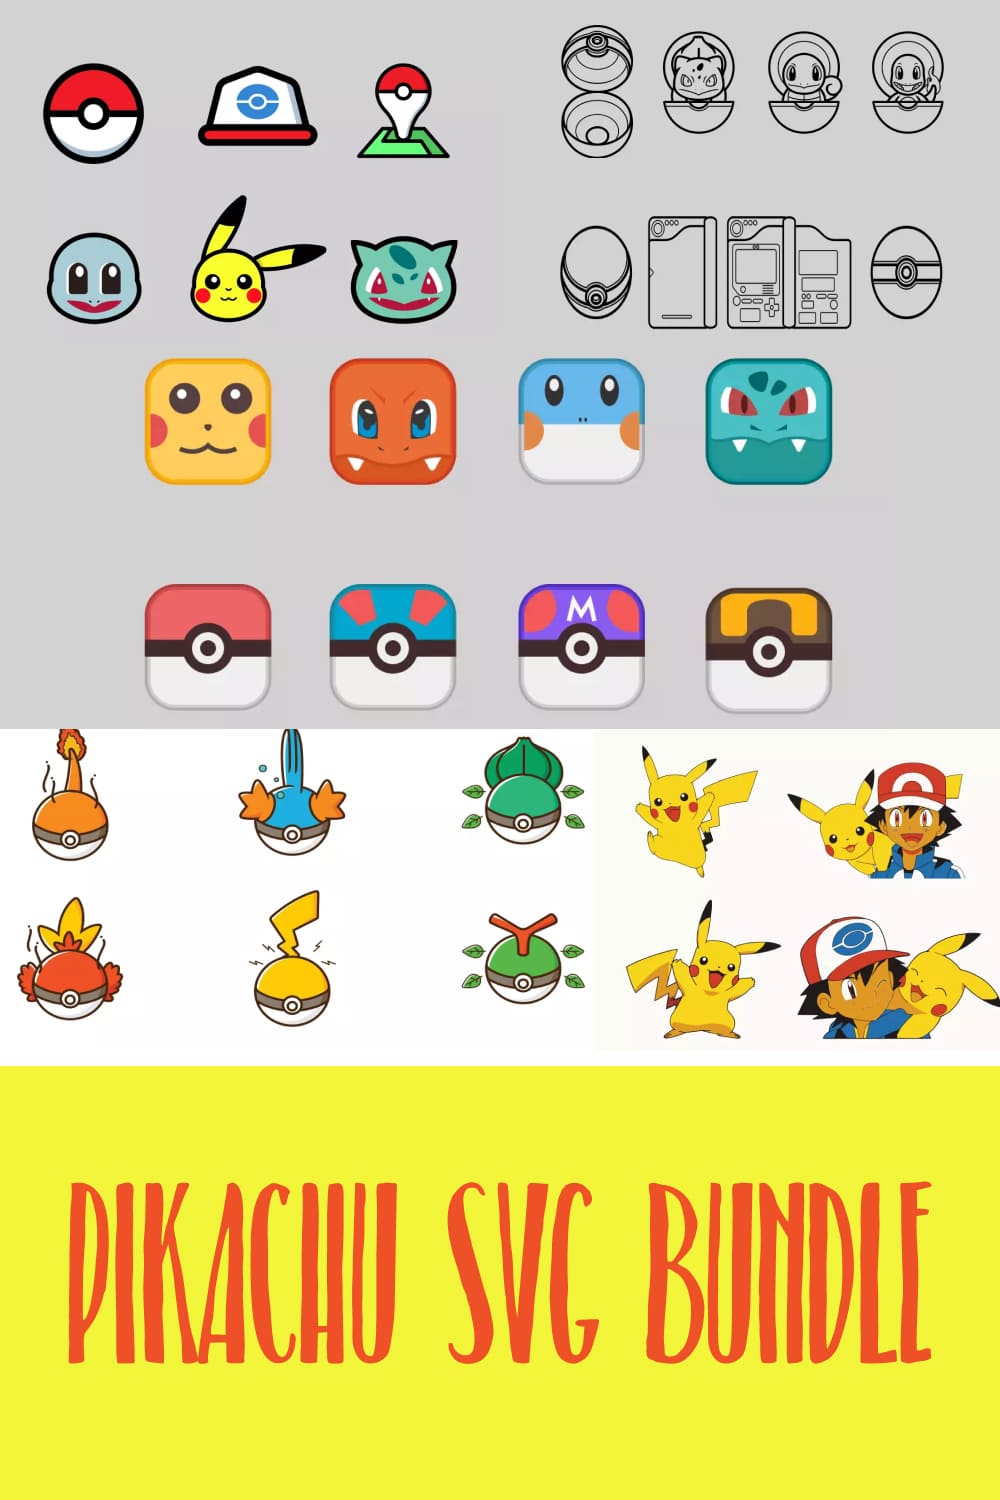 Pikachu SVG Bundle - Pinterest.